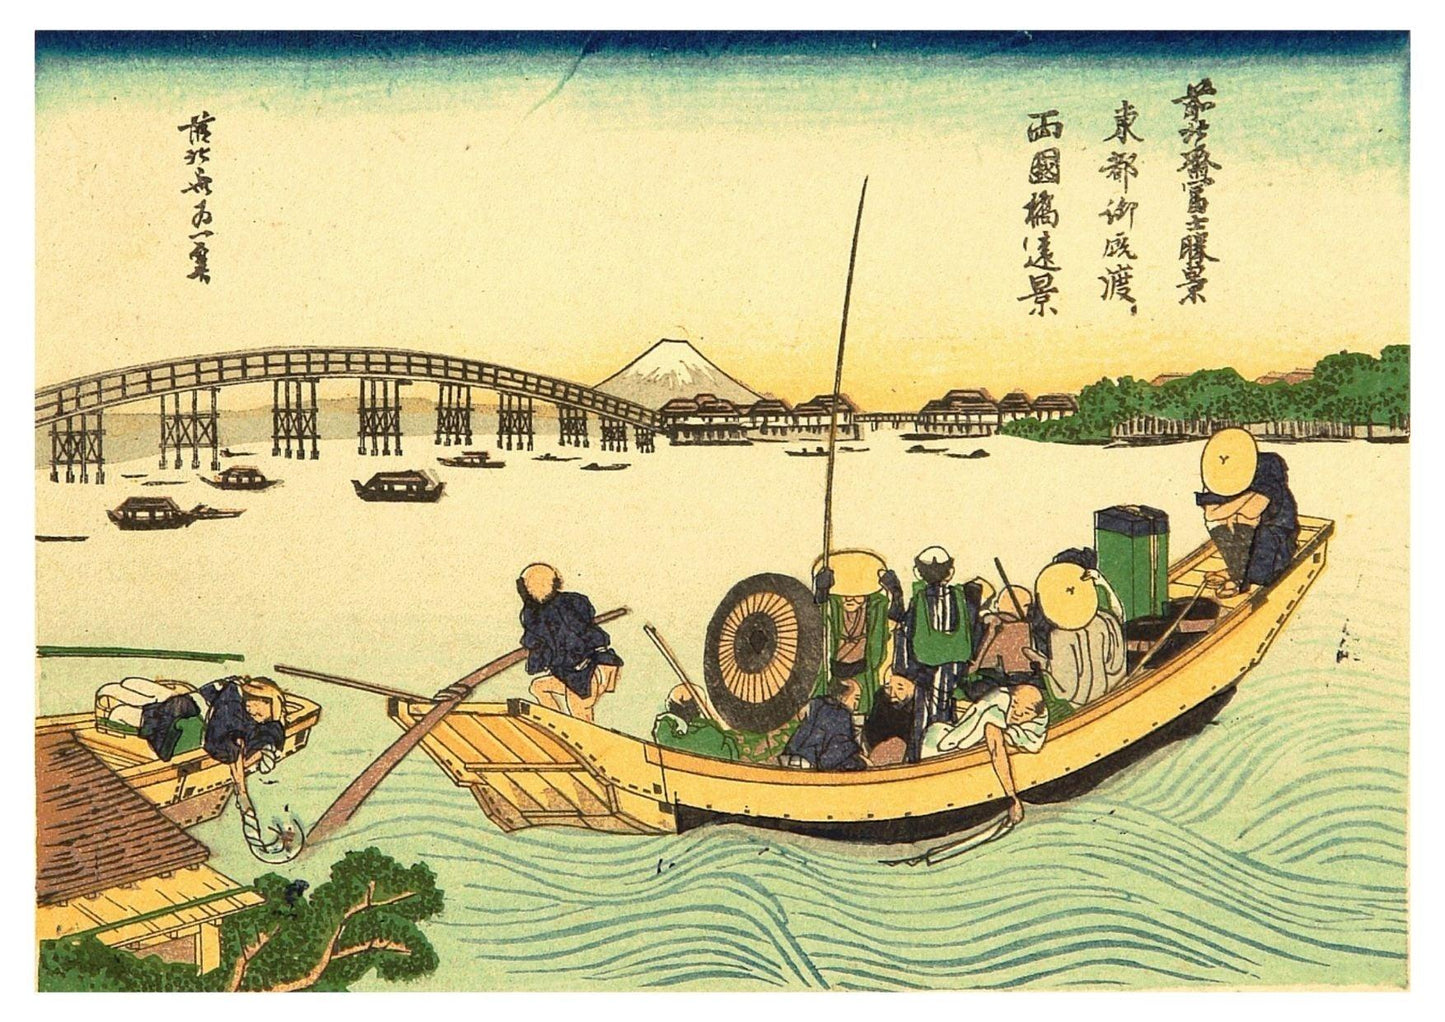 36 Views of Mt Fuji - Hokusai - Digital Download - Kaito Japan Design 